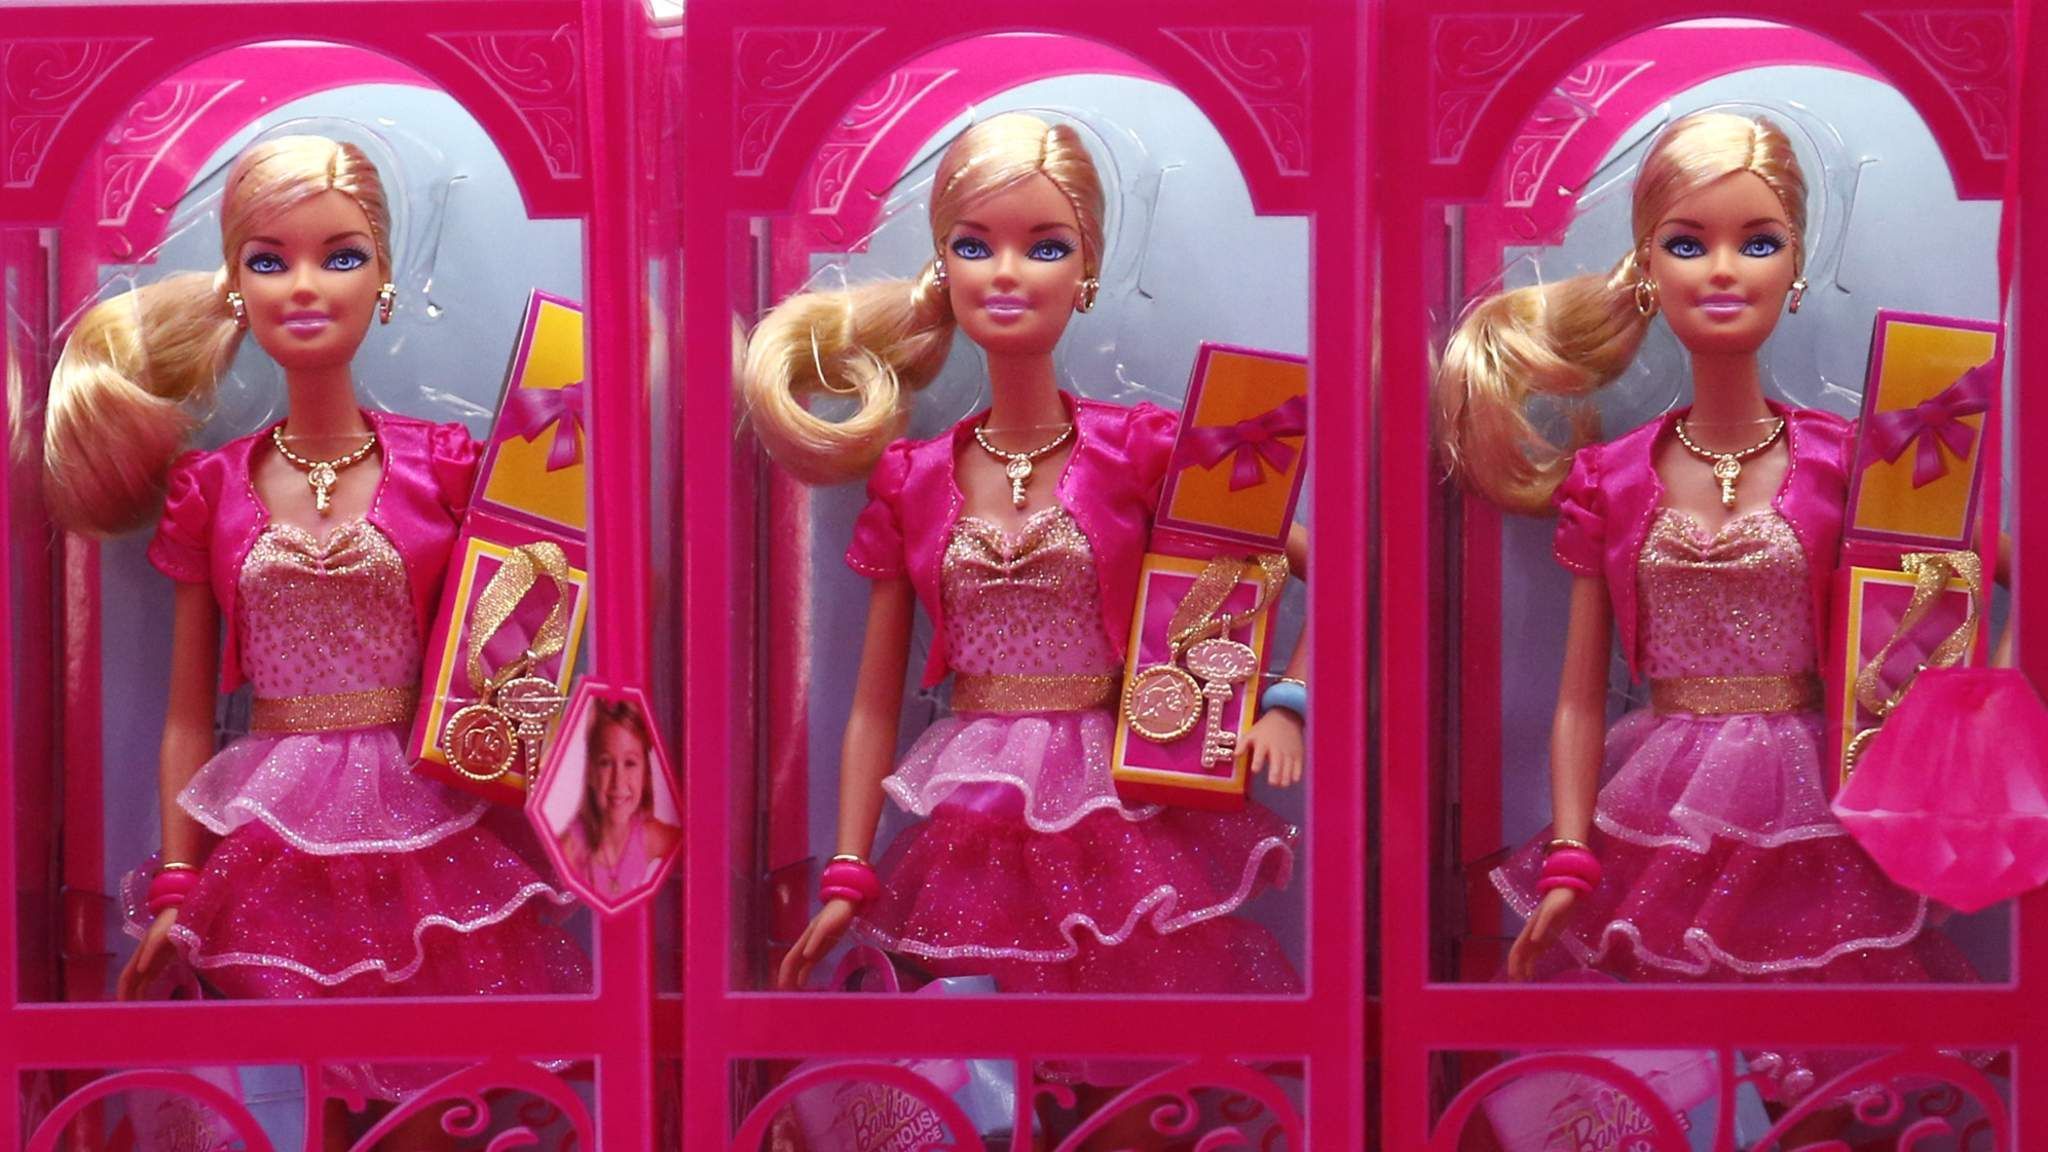 Barbie Owner Mattel Sees Profit Plunge 24%, Business News